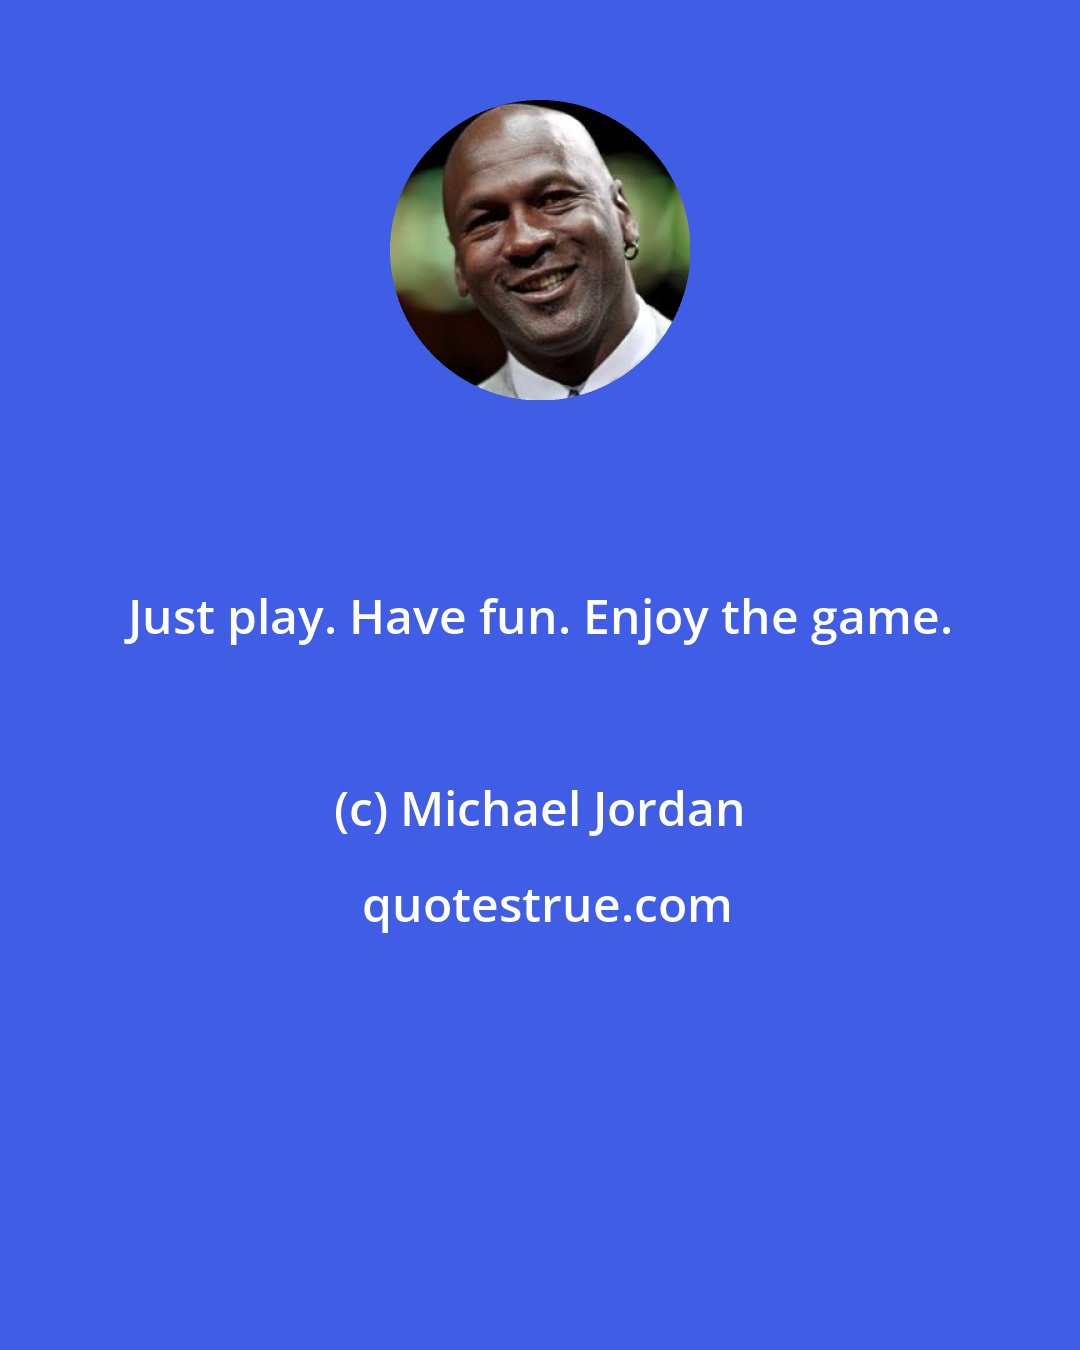 Michael Jordan: Just play. Have fun. Enjoy the game.